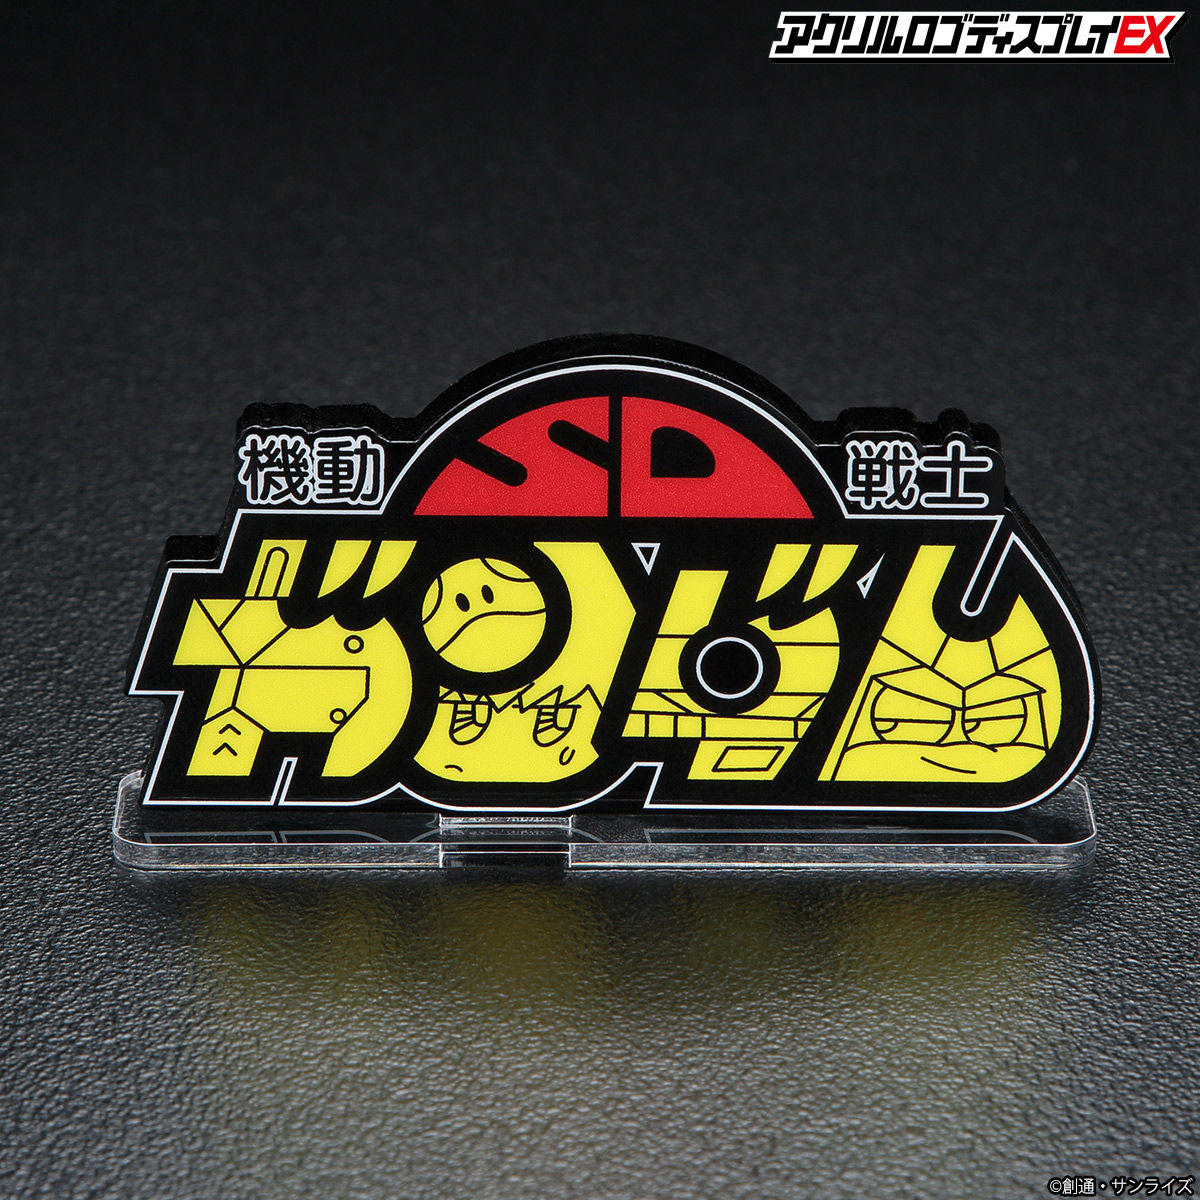 Acrylic Logo Diplay EX-Mobile Suit SD Gundam